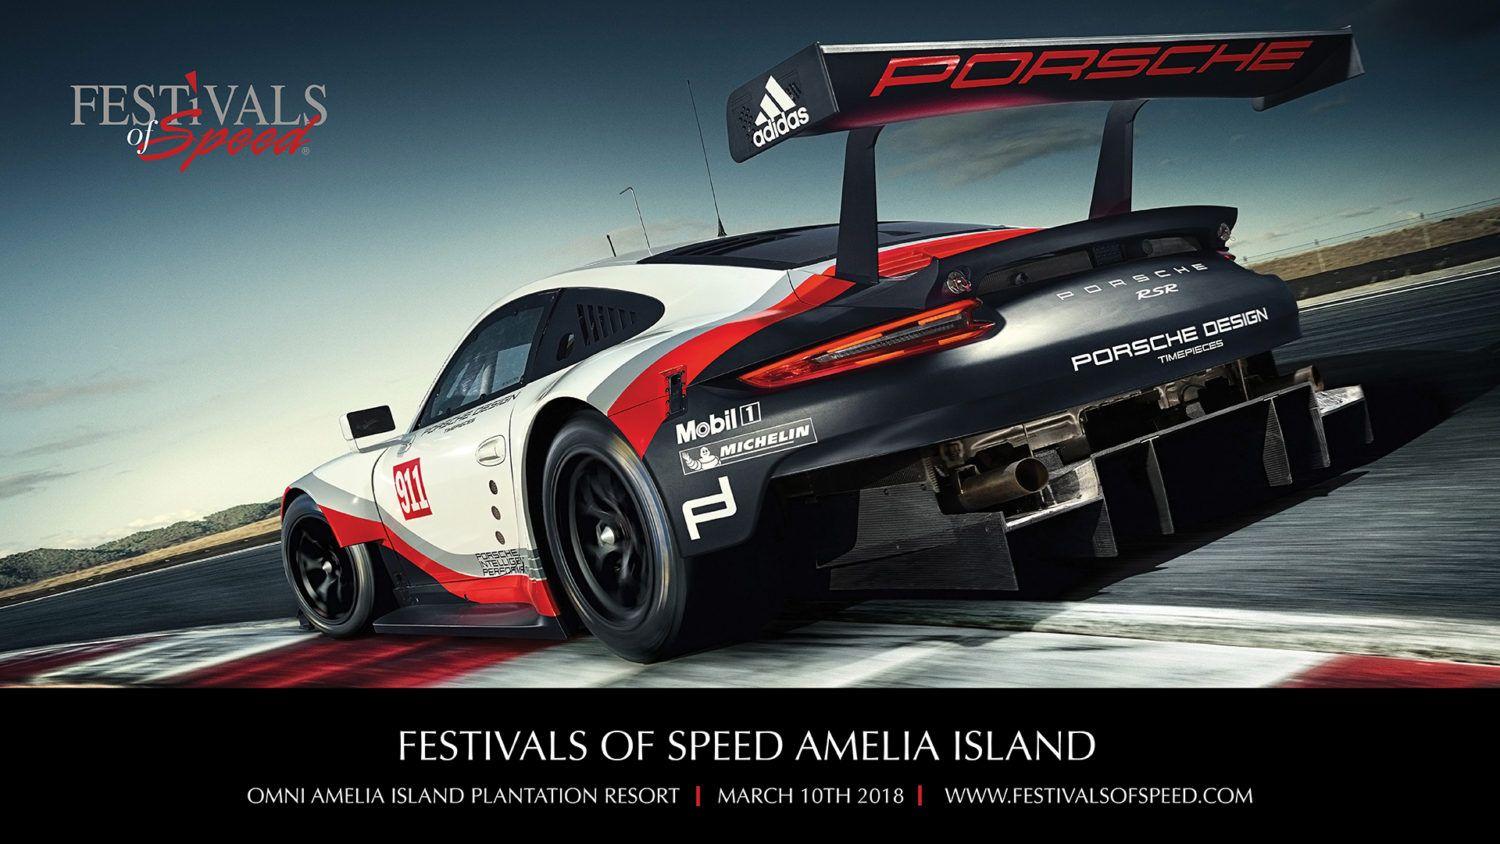 Festivals of Speed. Desktop Wallpaper of Speed